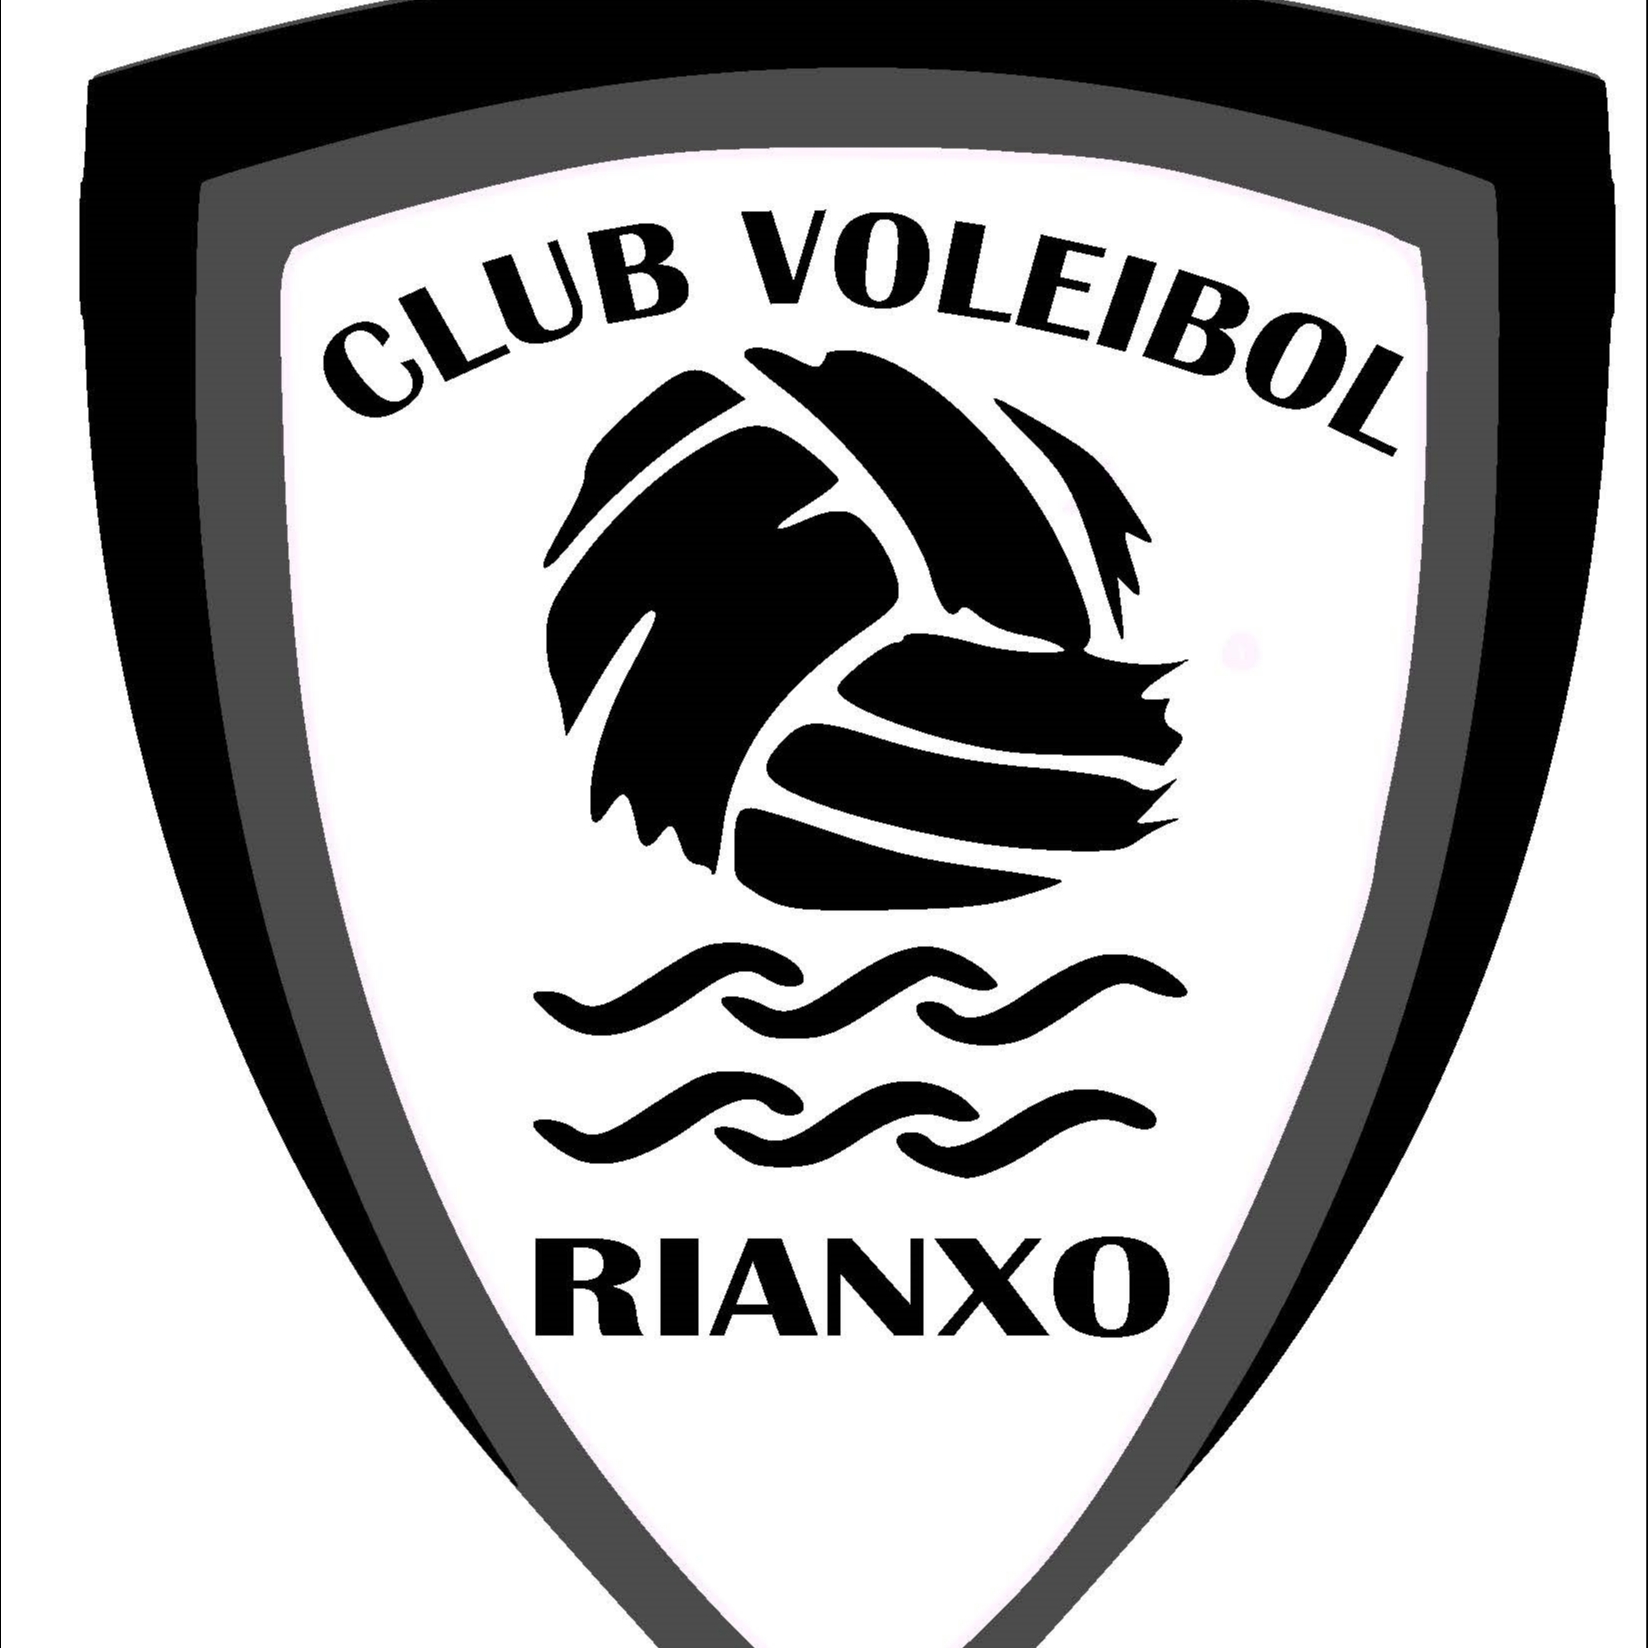 Club Voleibol RIanxo